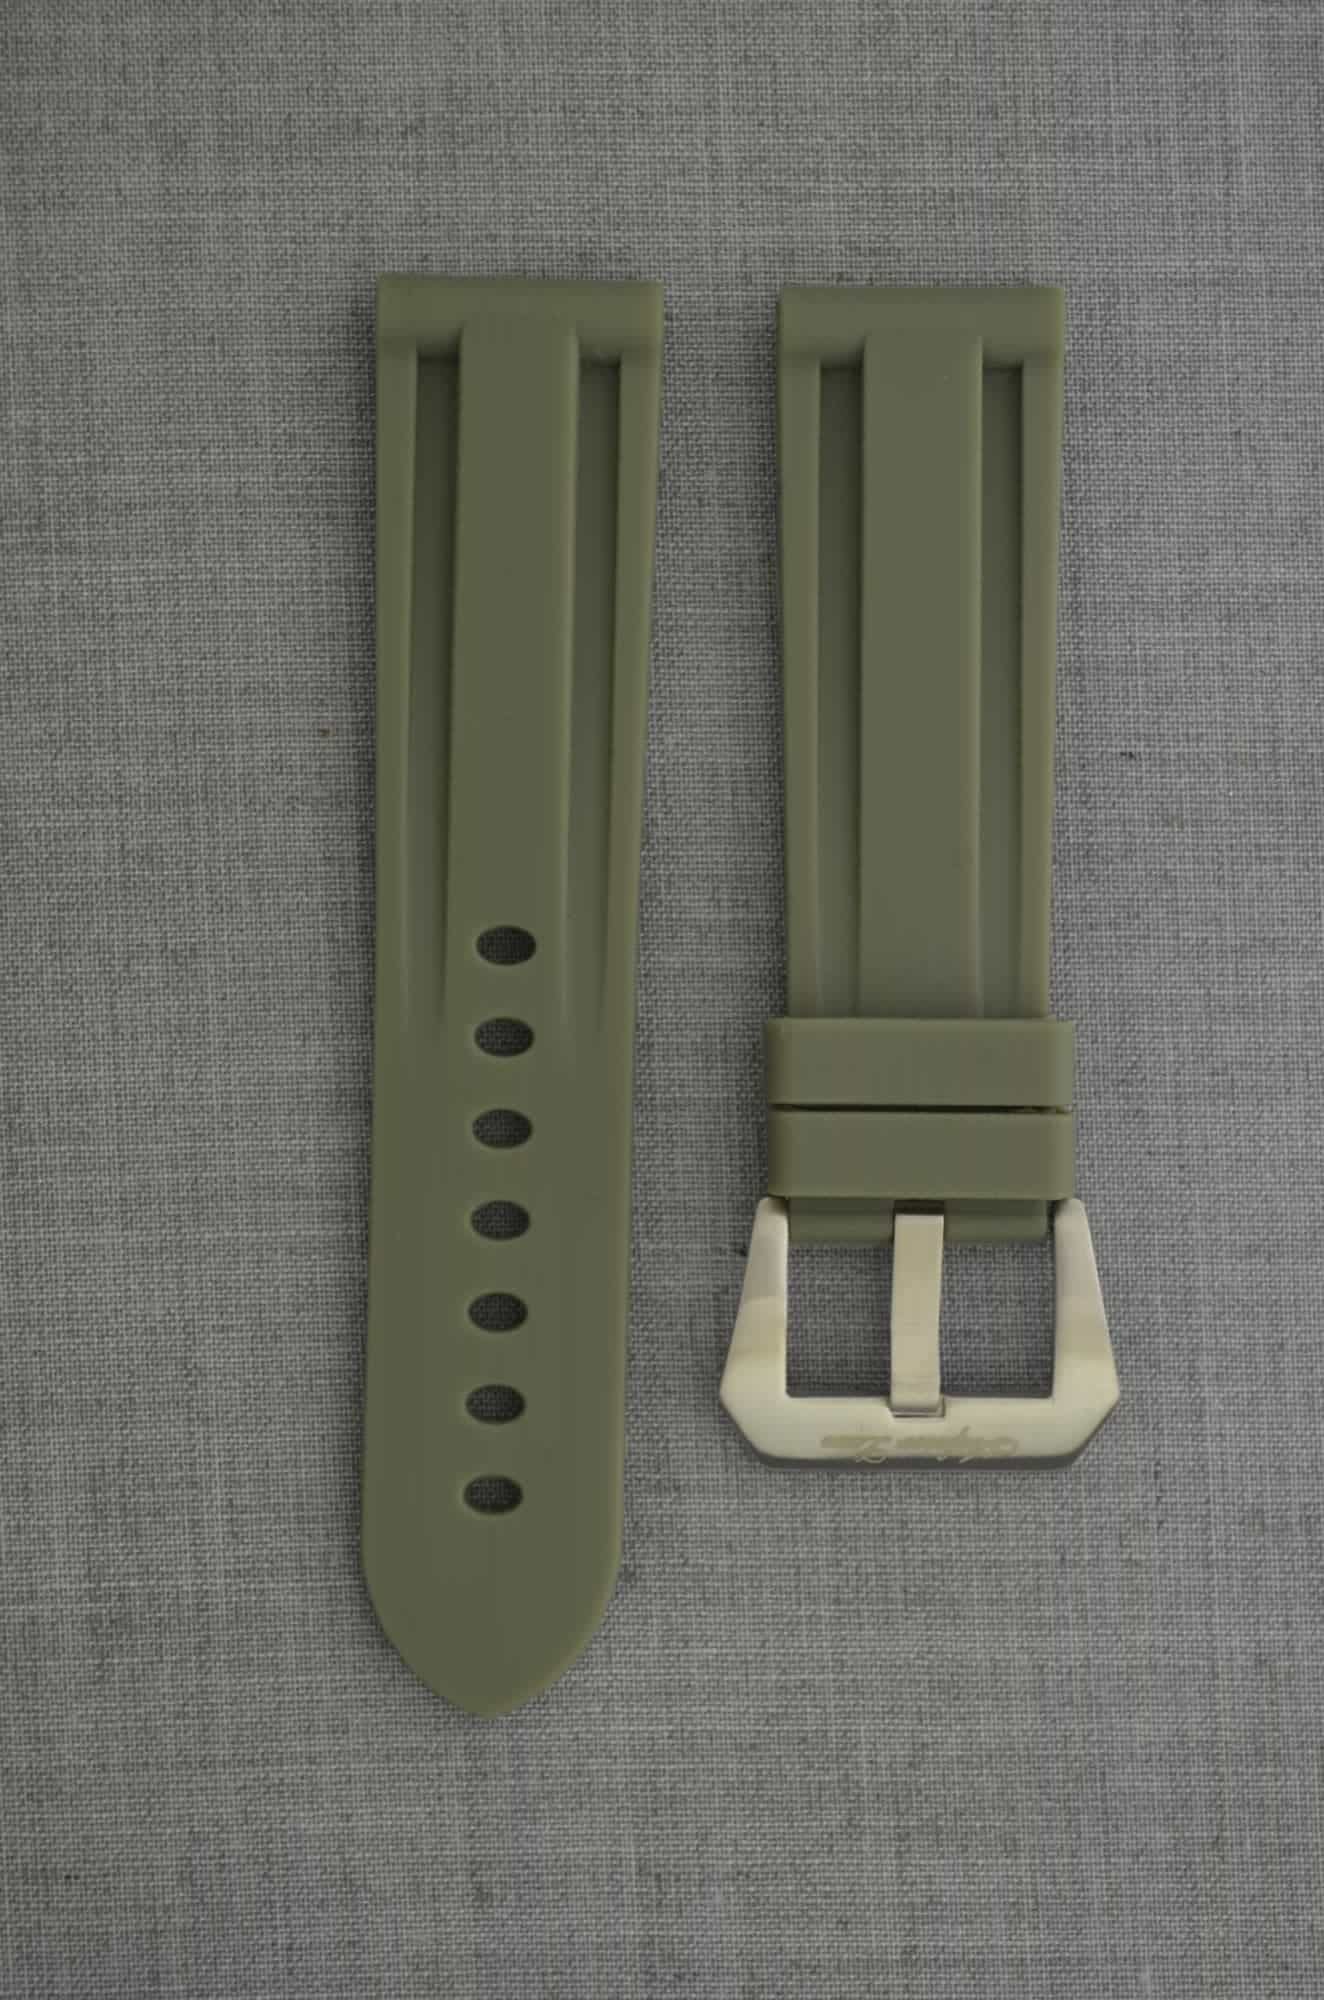 SOP-A 方扣高純度矽膠錶帶 - 軍綠色（適用 Panerai 沛納海 24mm 方扣錶款）